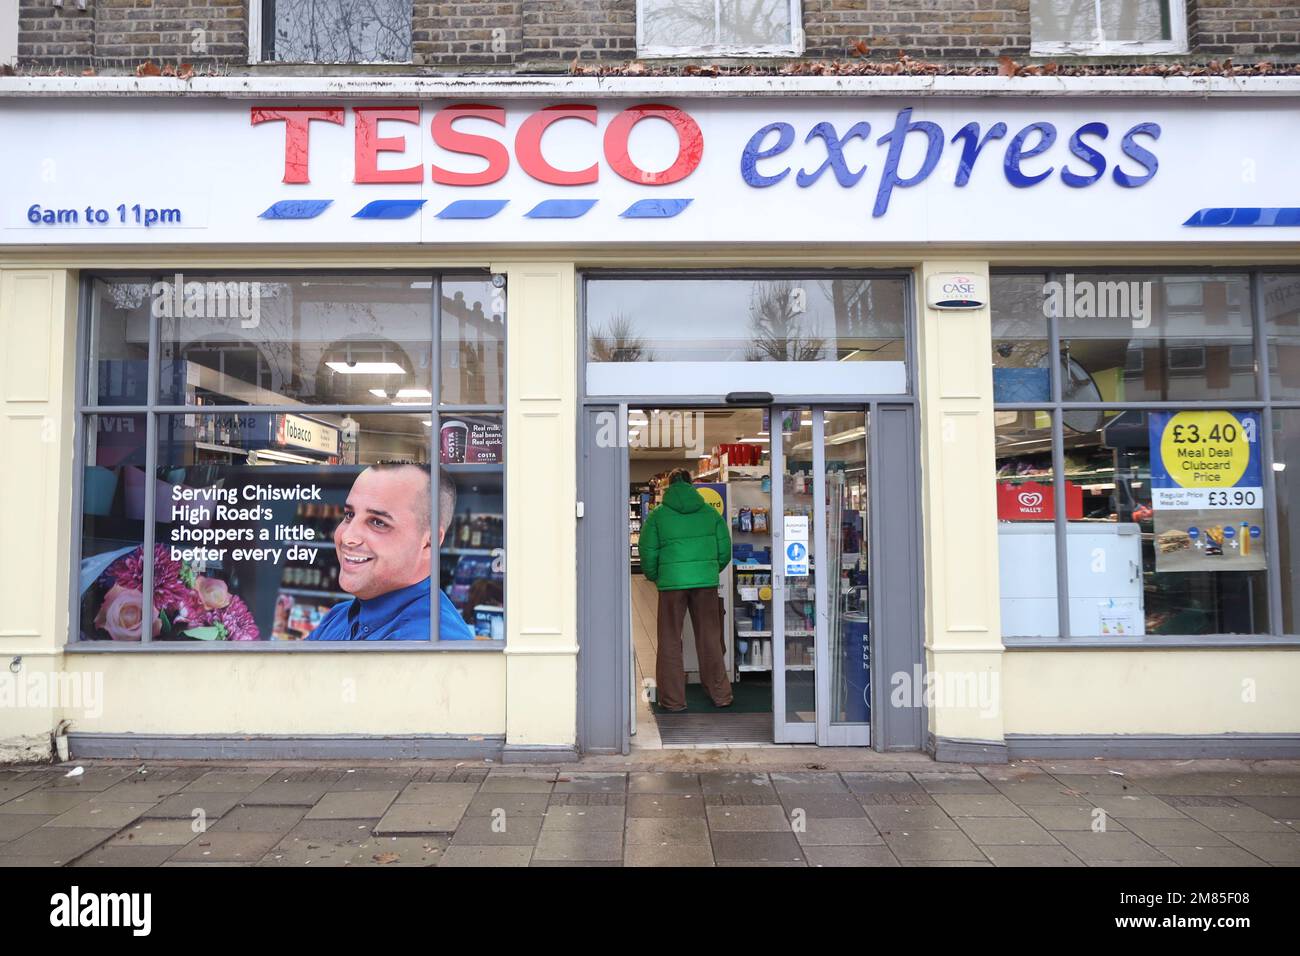 Tesco Express shop in Chiswick. Stock Photo